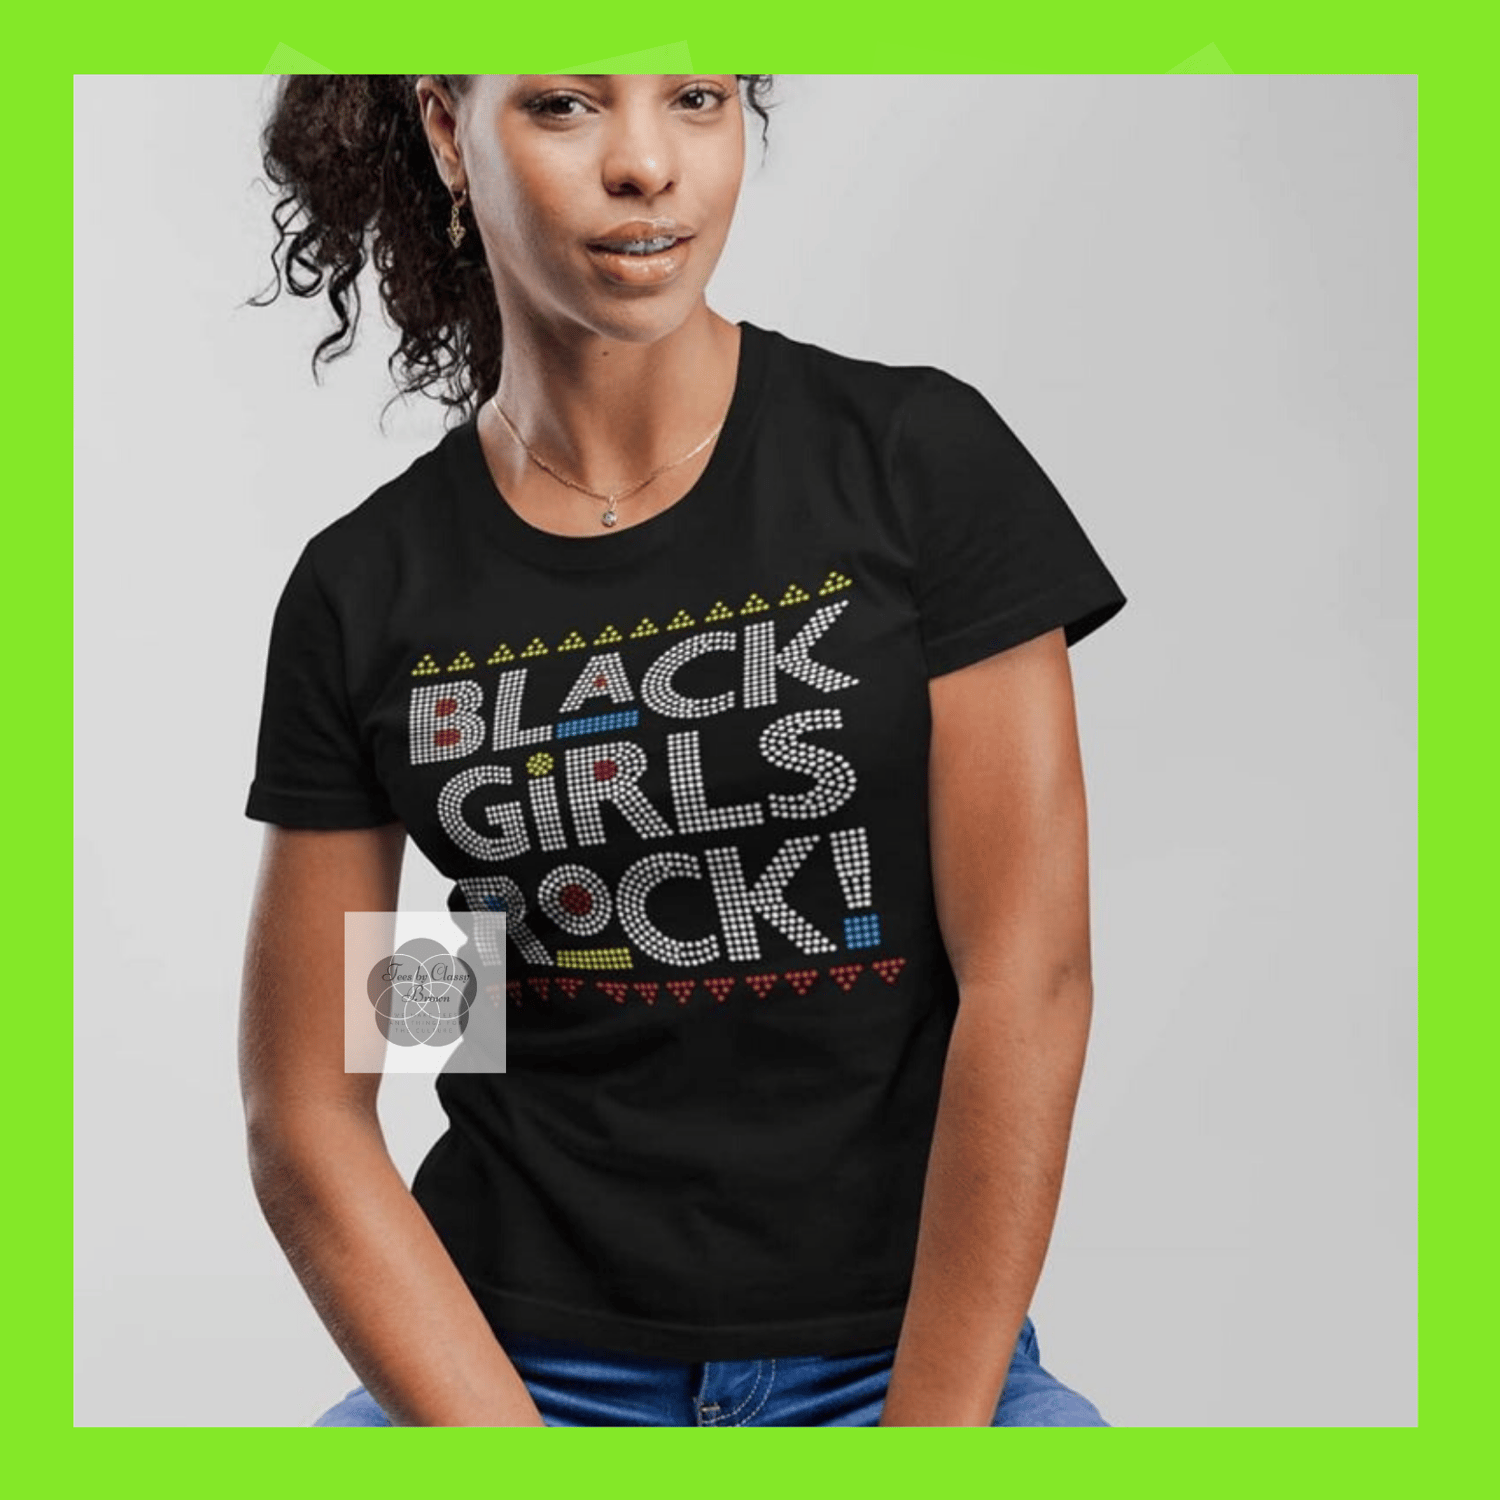 Black Girls' Rock!